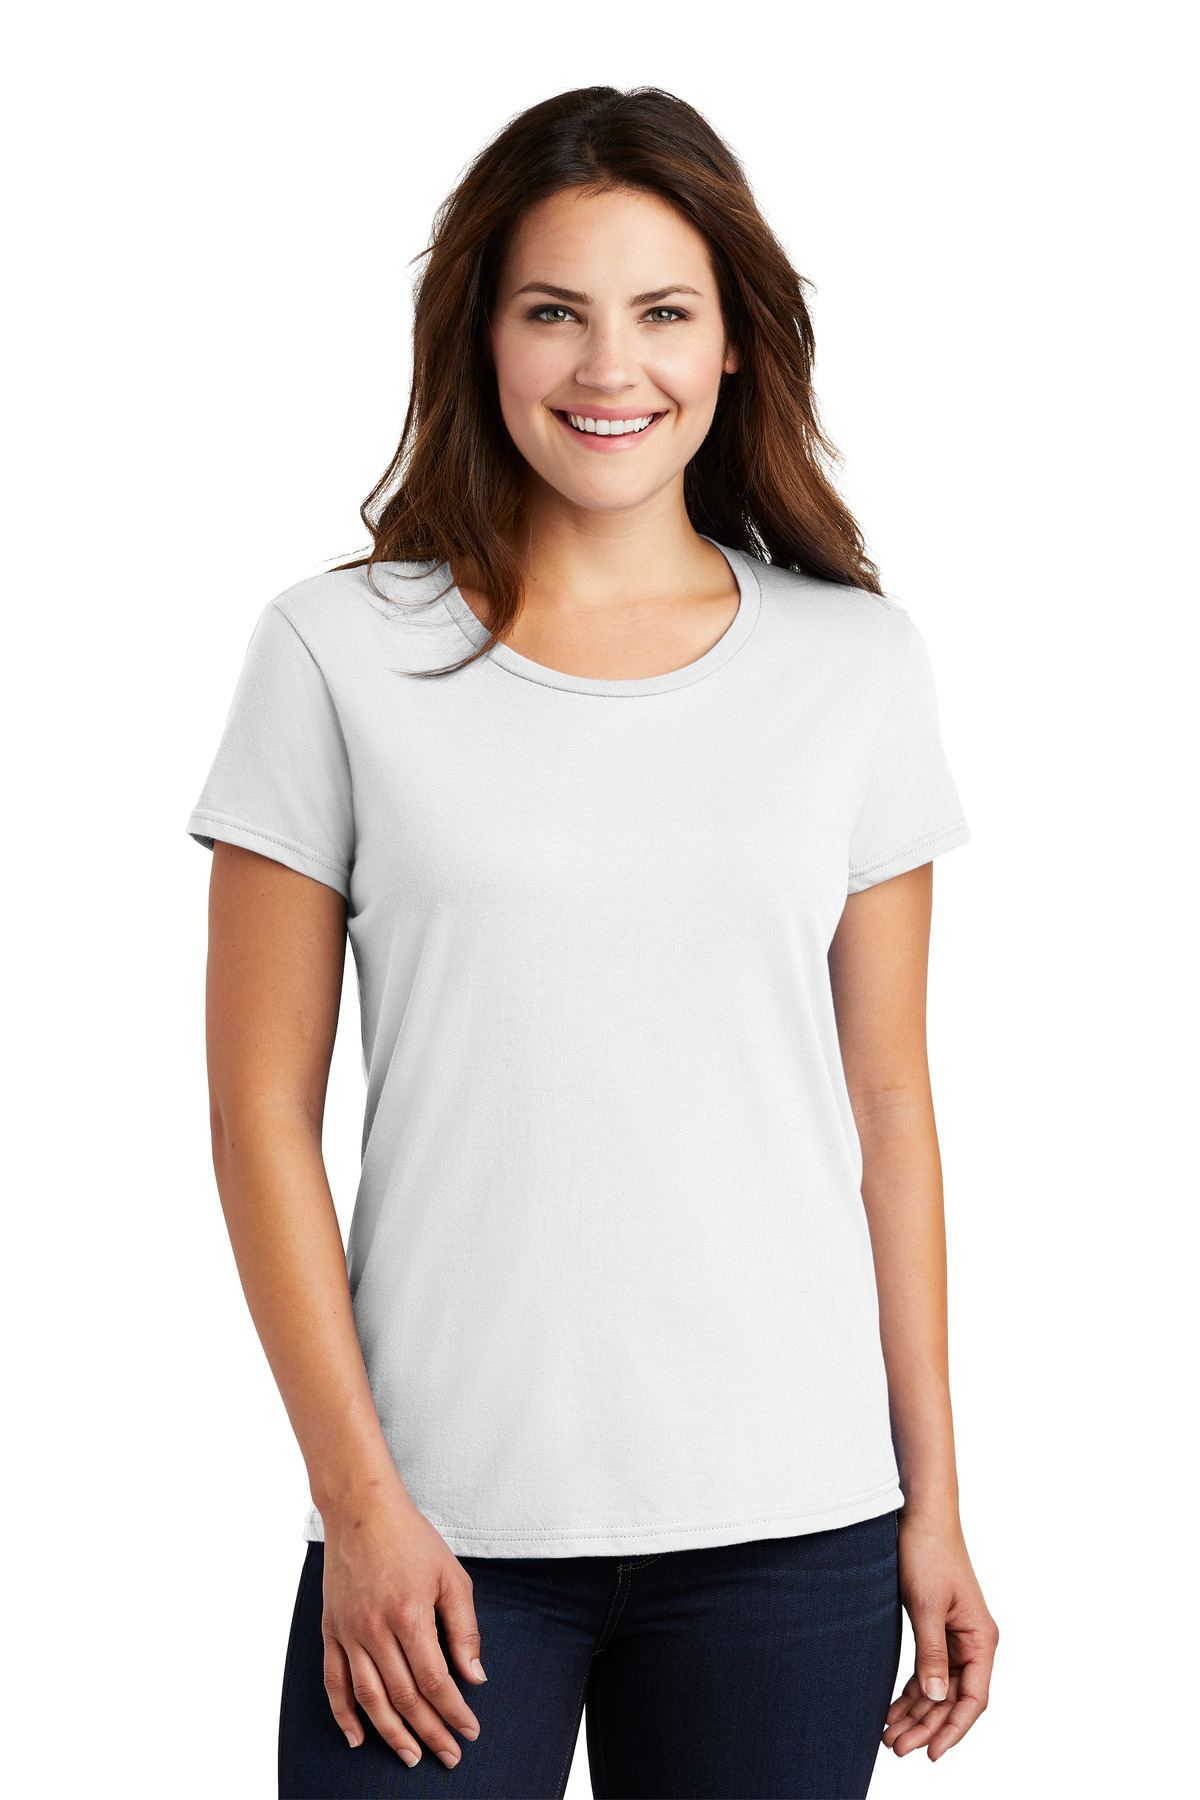 Anvil Corporate Hospitality Ladies T-Shirts ® Ladies 100% Combed Ring Spun Cotton T-Shirt.-Gildan